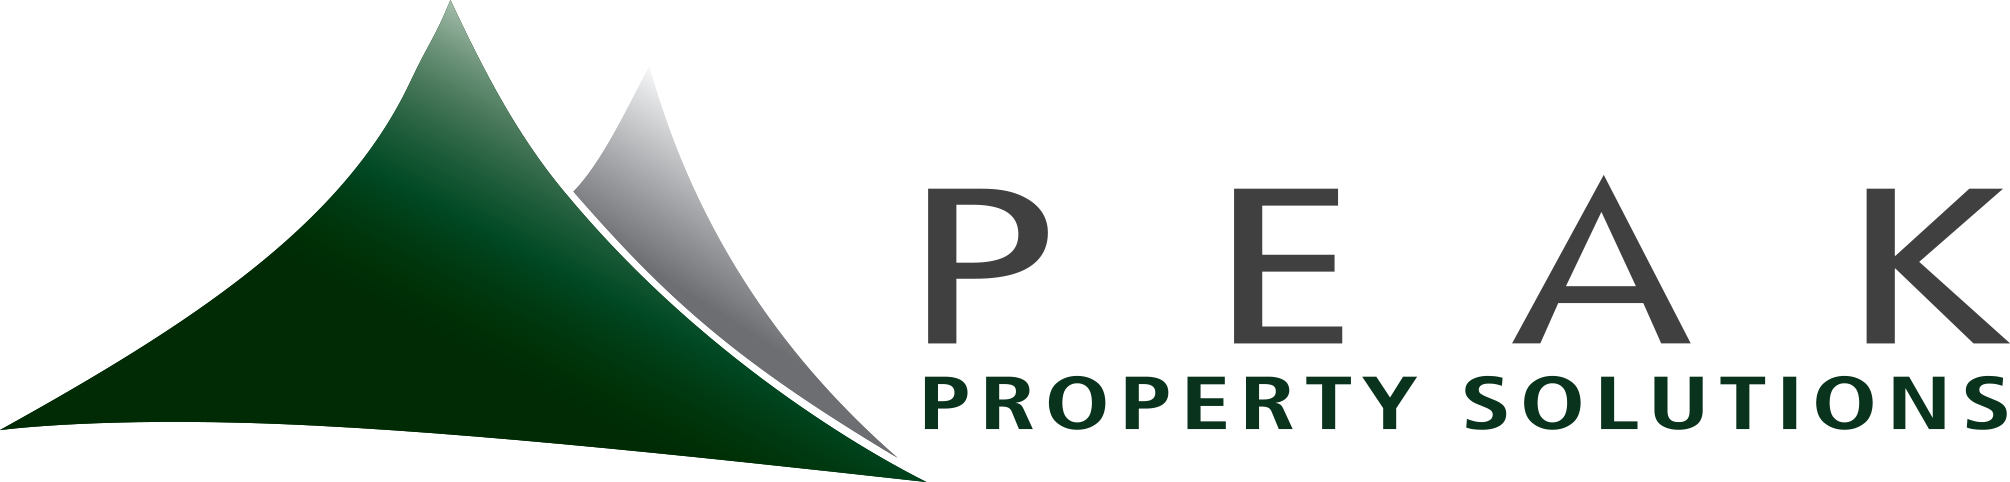 Peak Property Solutions